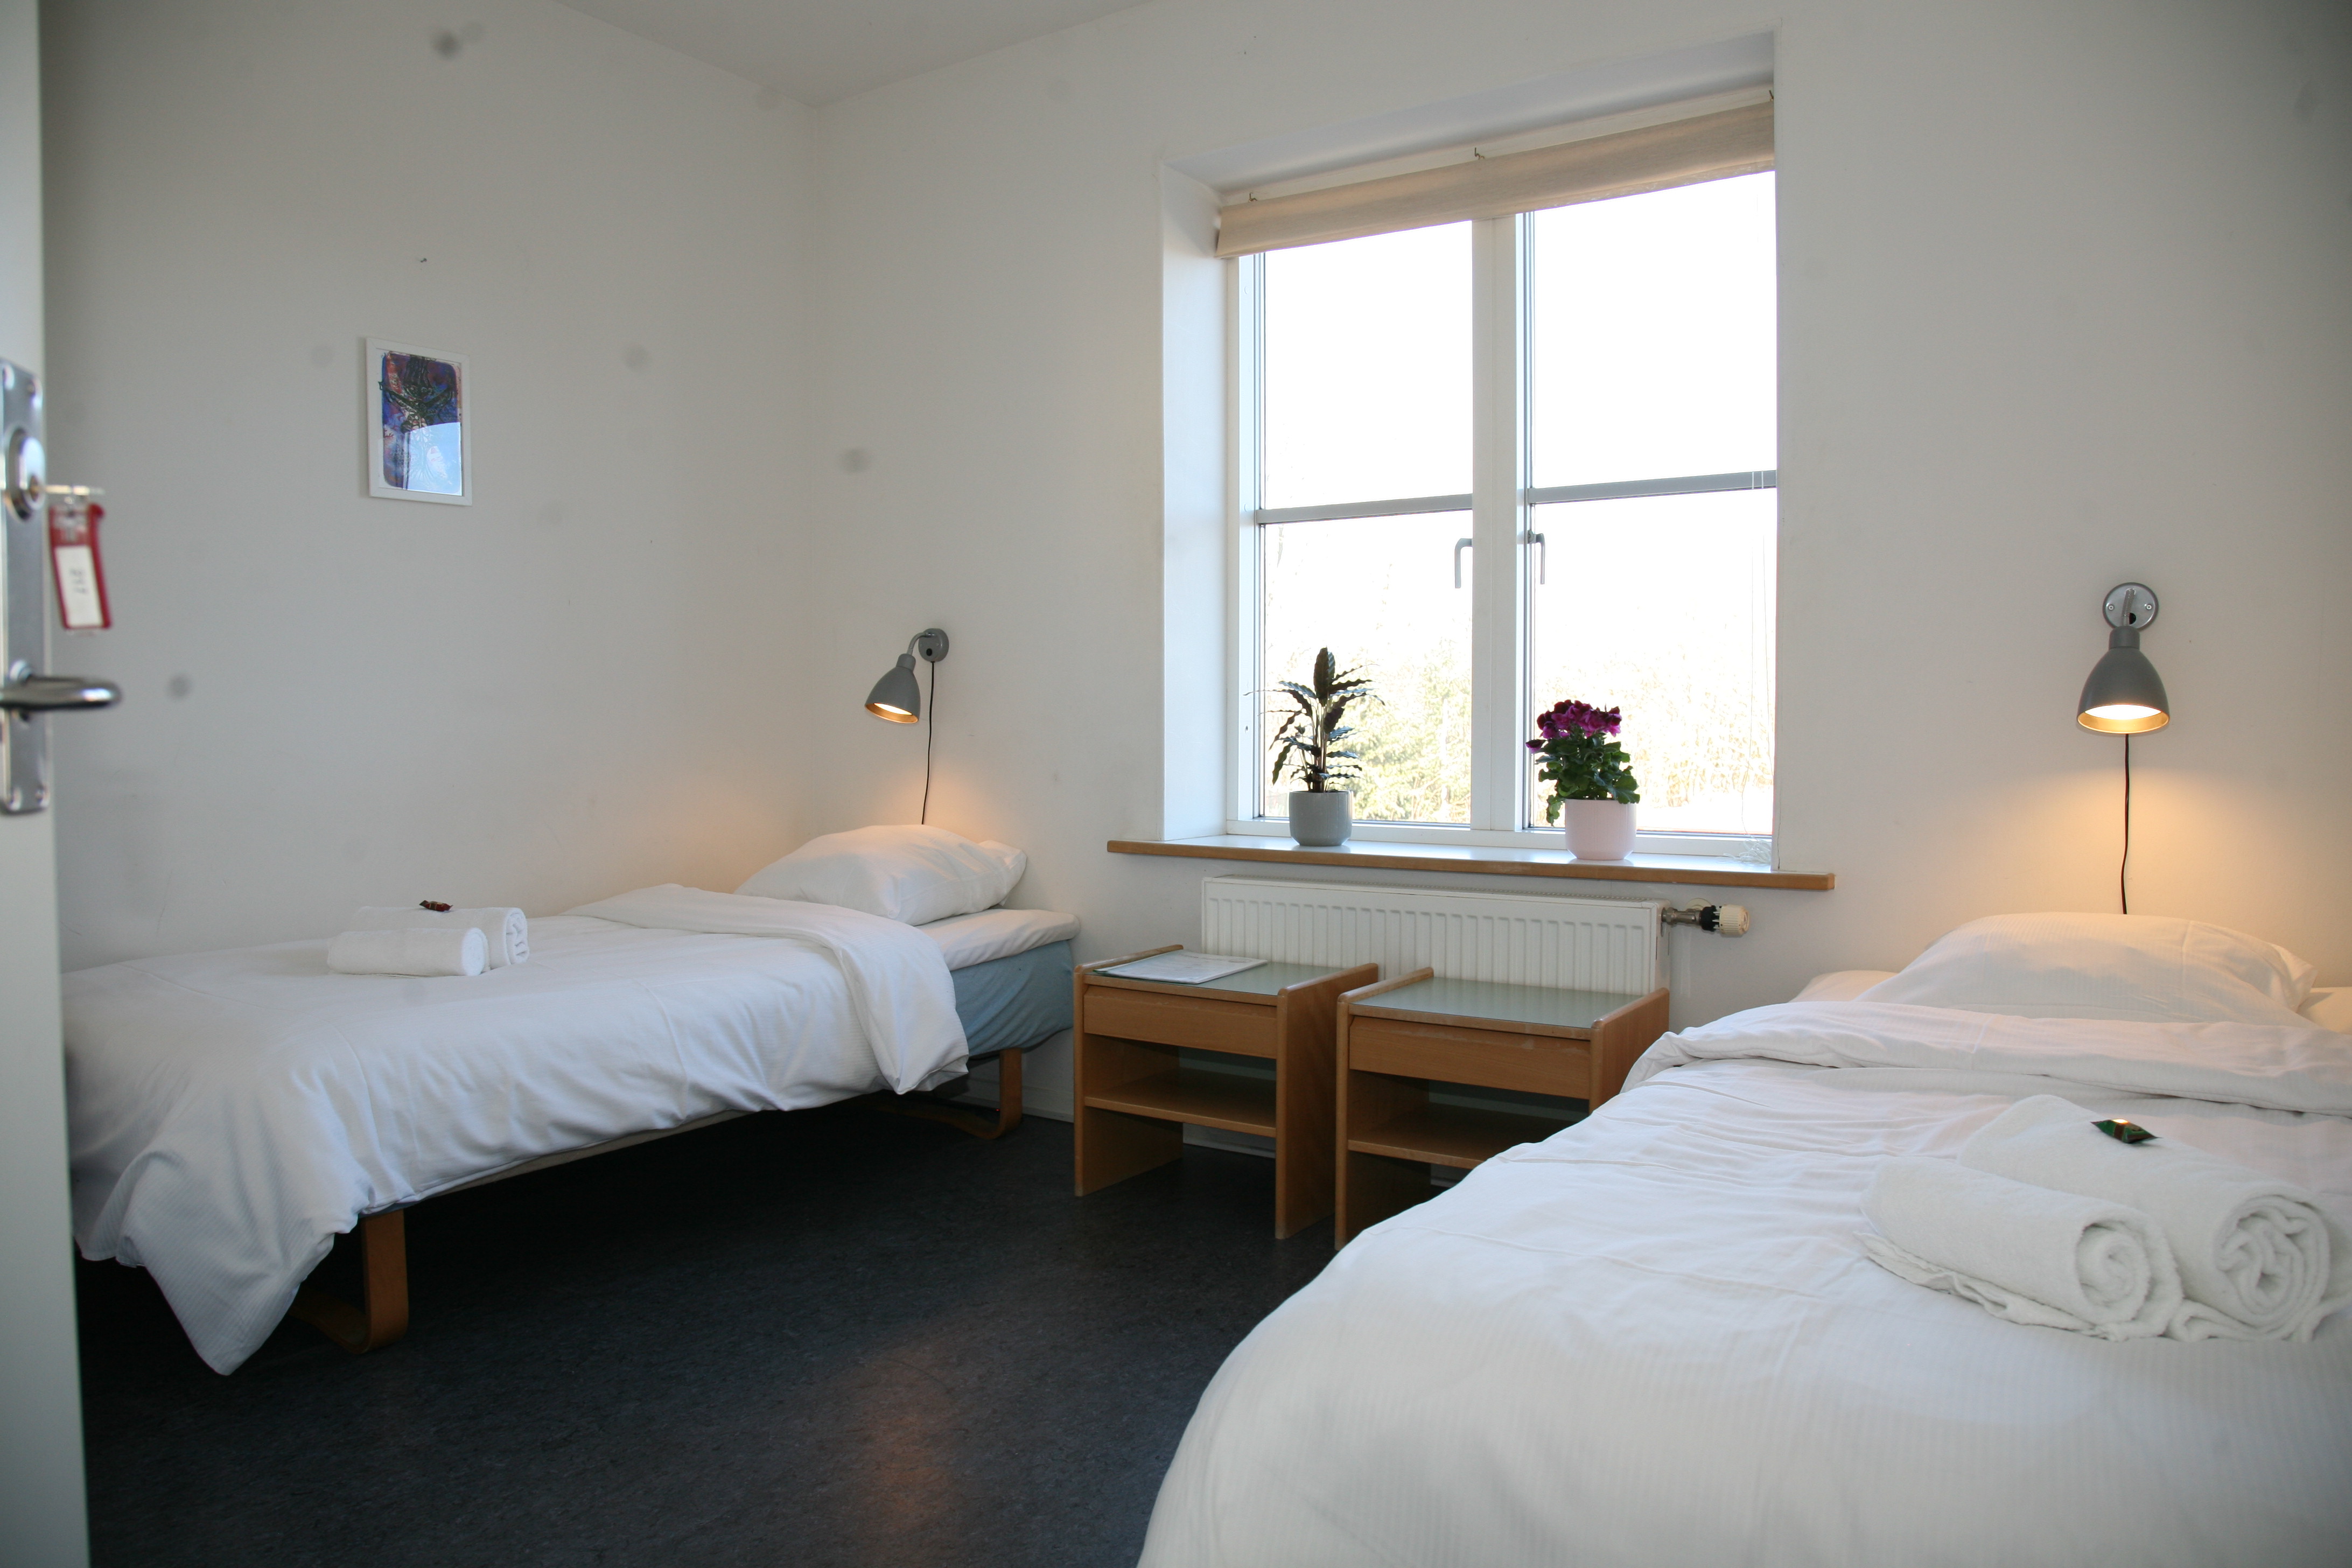 Nexø Hostel – Billig overnatning til Folkemødet 2022